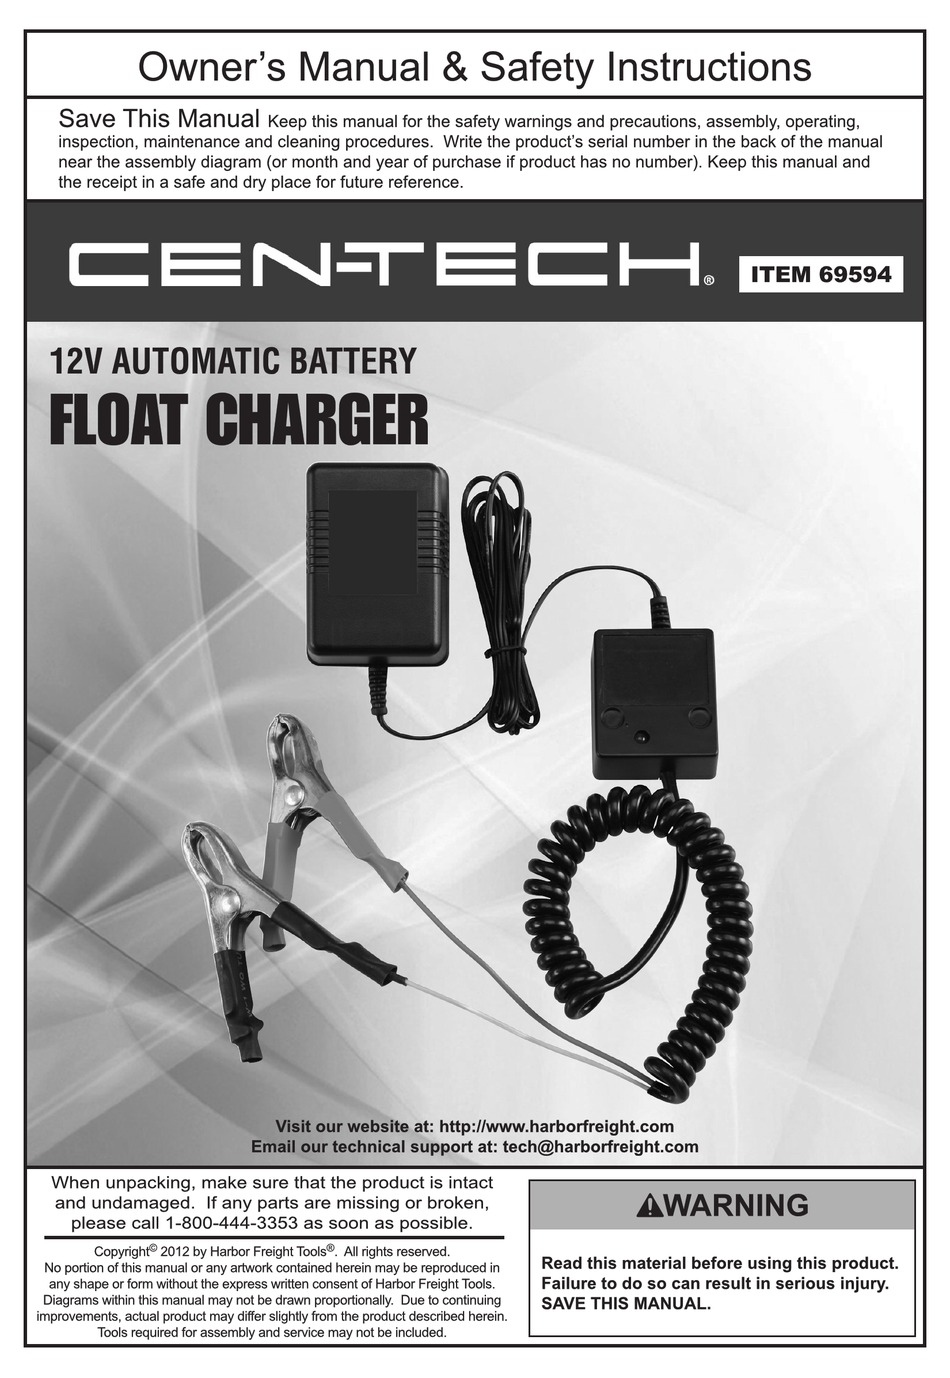 CENTECH 69594 OWNER'S MANUAL Pdf Download | ManualsLib